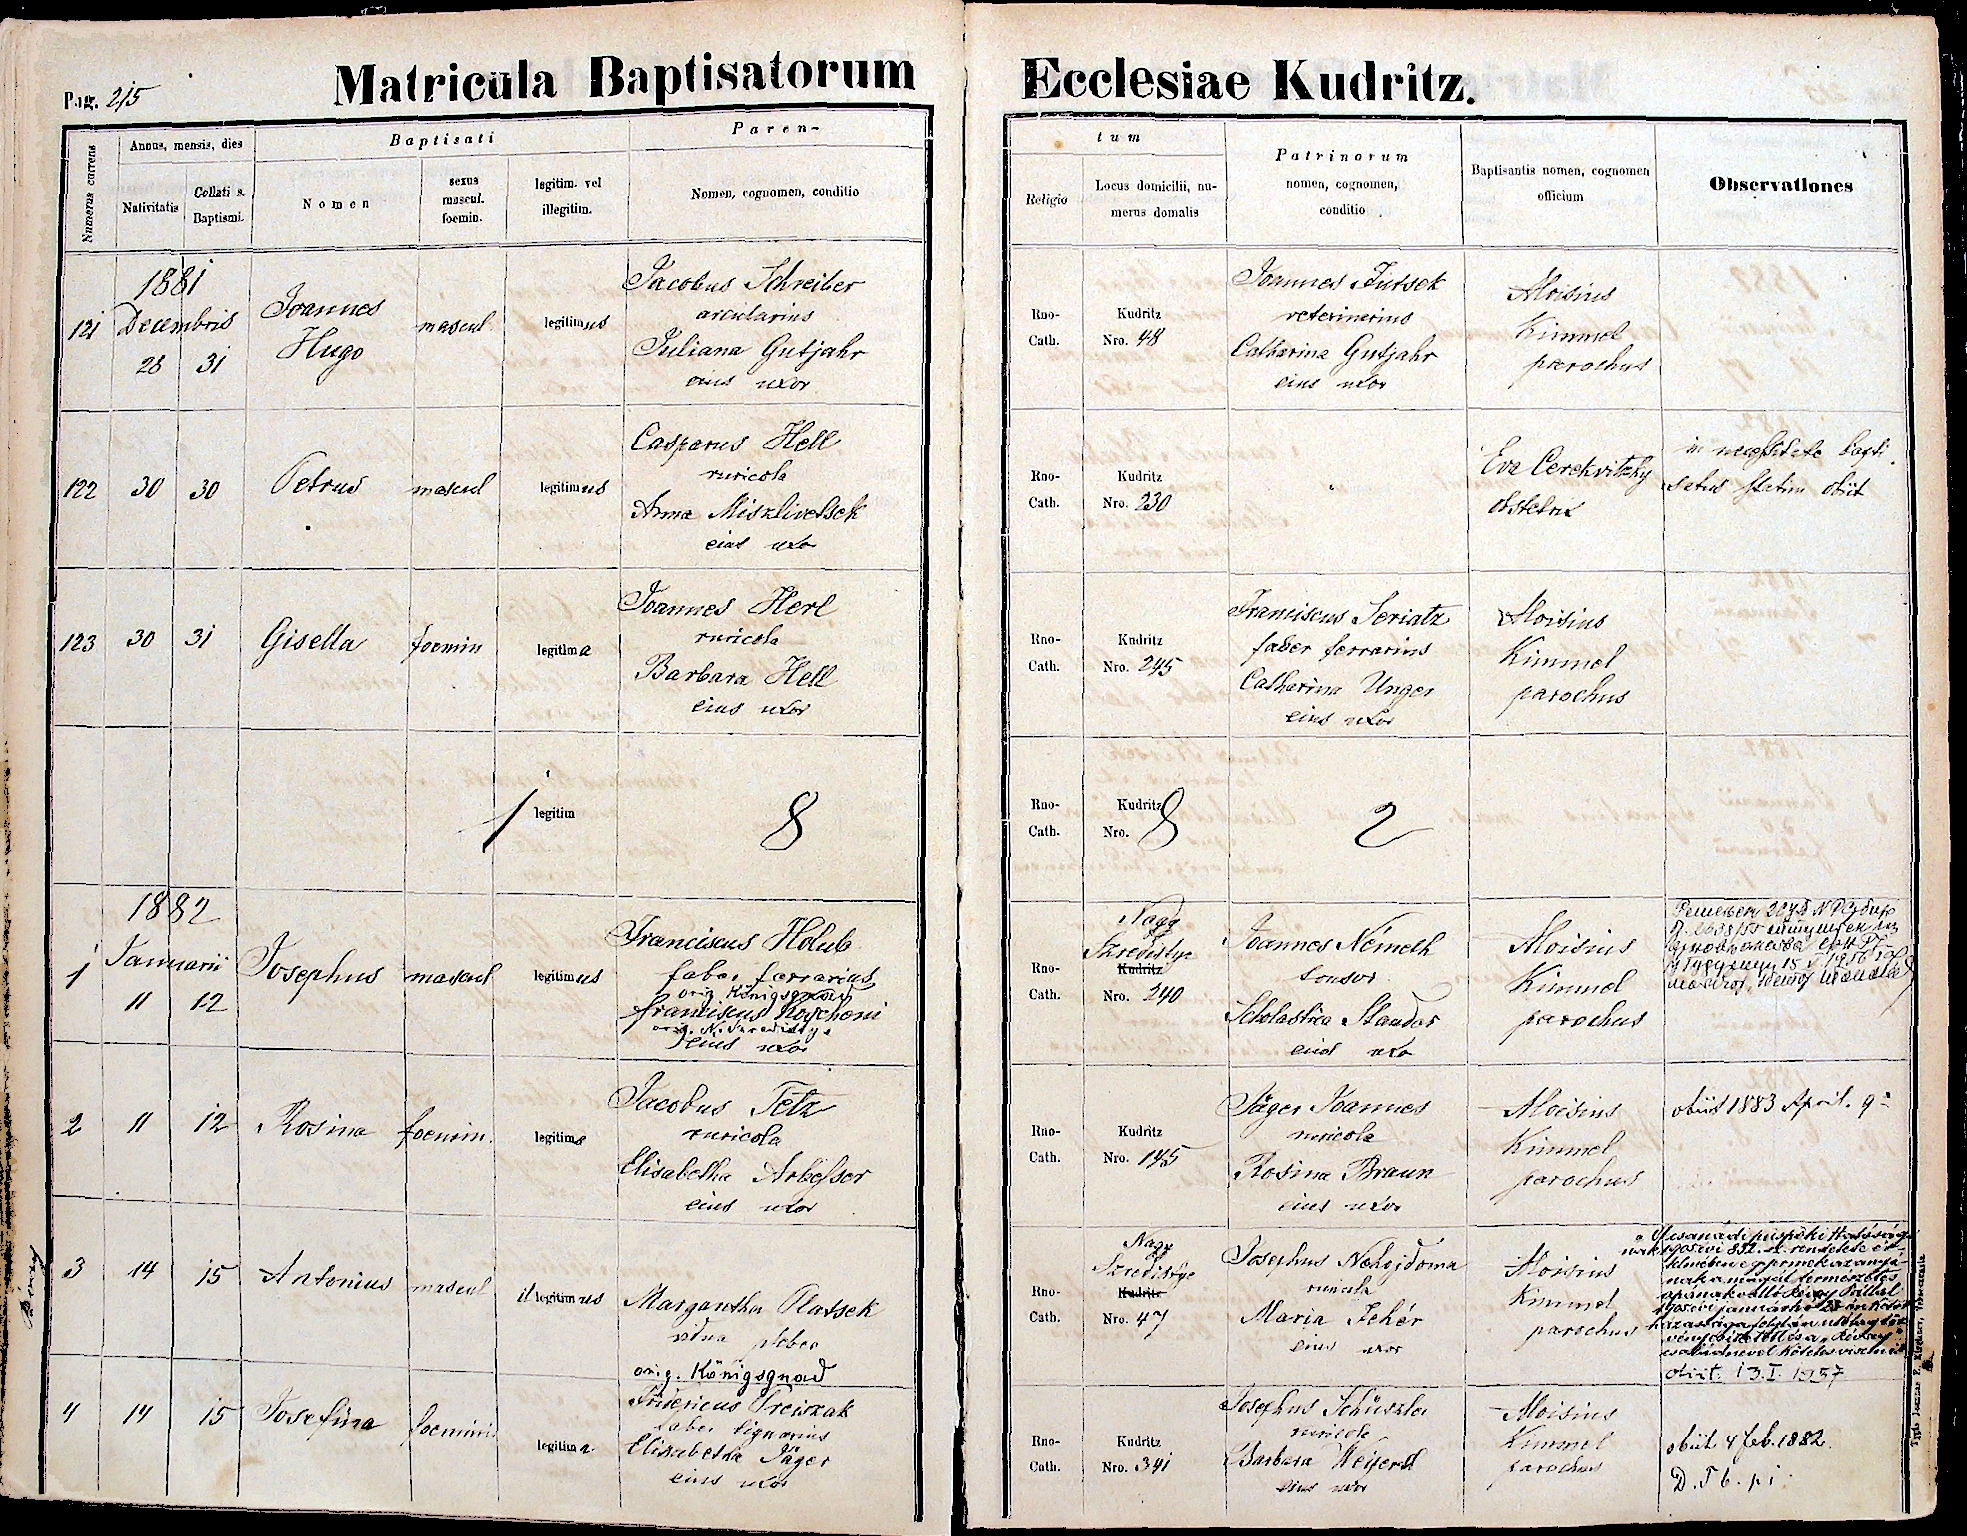 images/church_records/BIRTHS/1880-1883B/1881/215